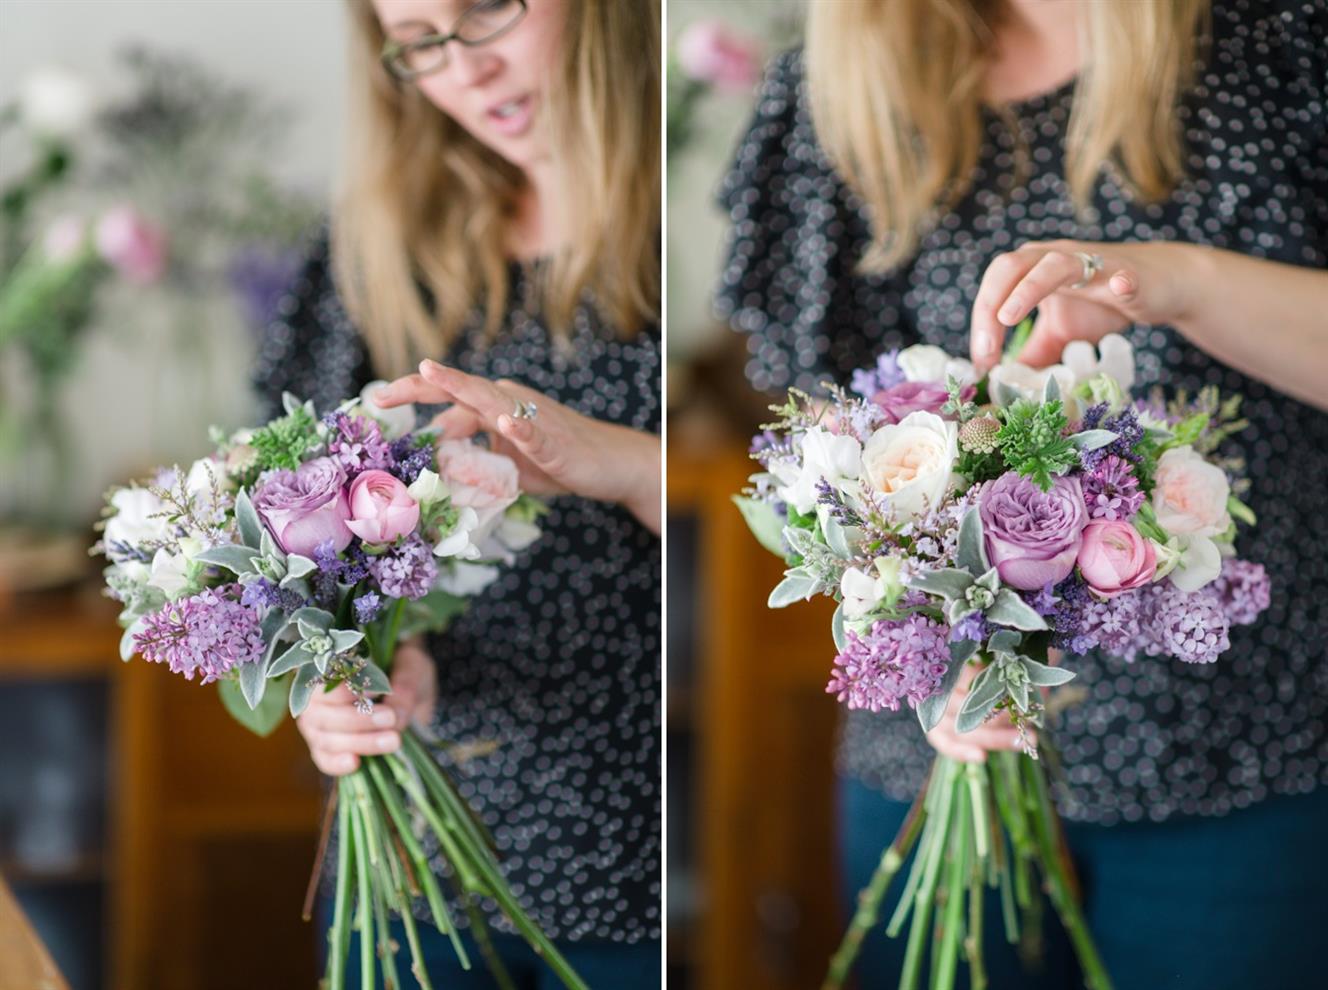 Wedding Bouquet Recipe ~ The Prettiest Bridal Bouquet of Purples & Pink